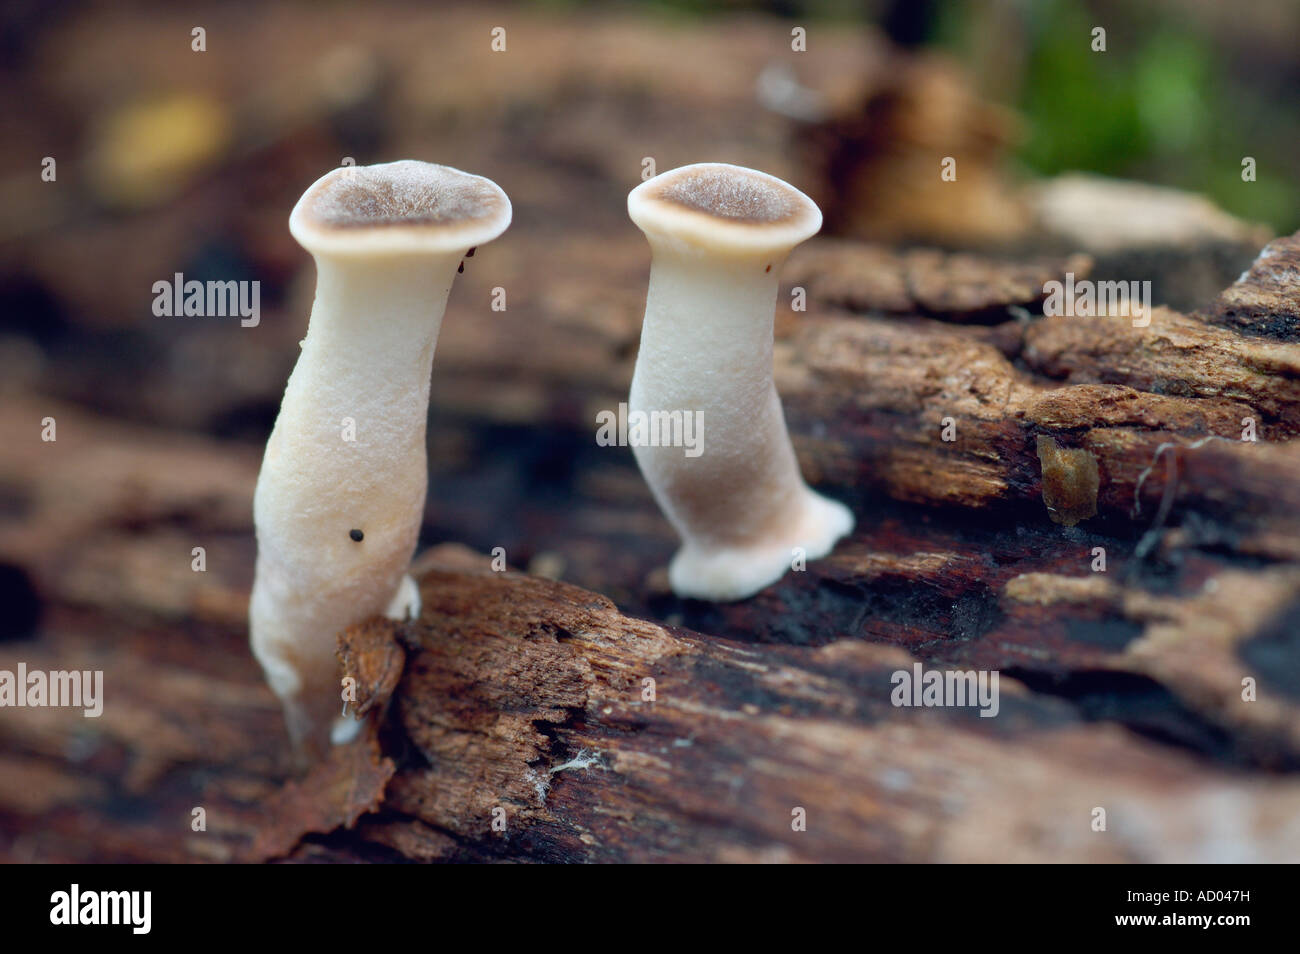 Macro of unusual mushroom Nidula niveotomentosa whitish cylindrical bodies growing on wood Stock Photo